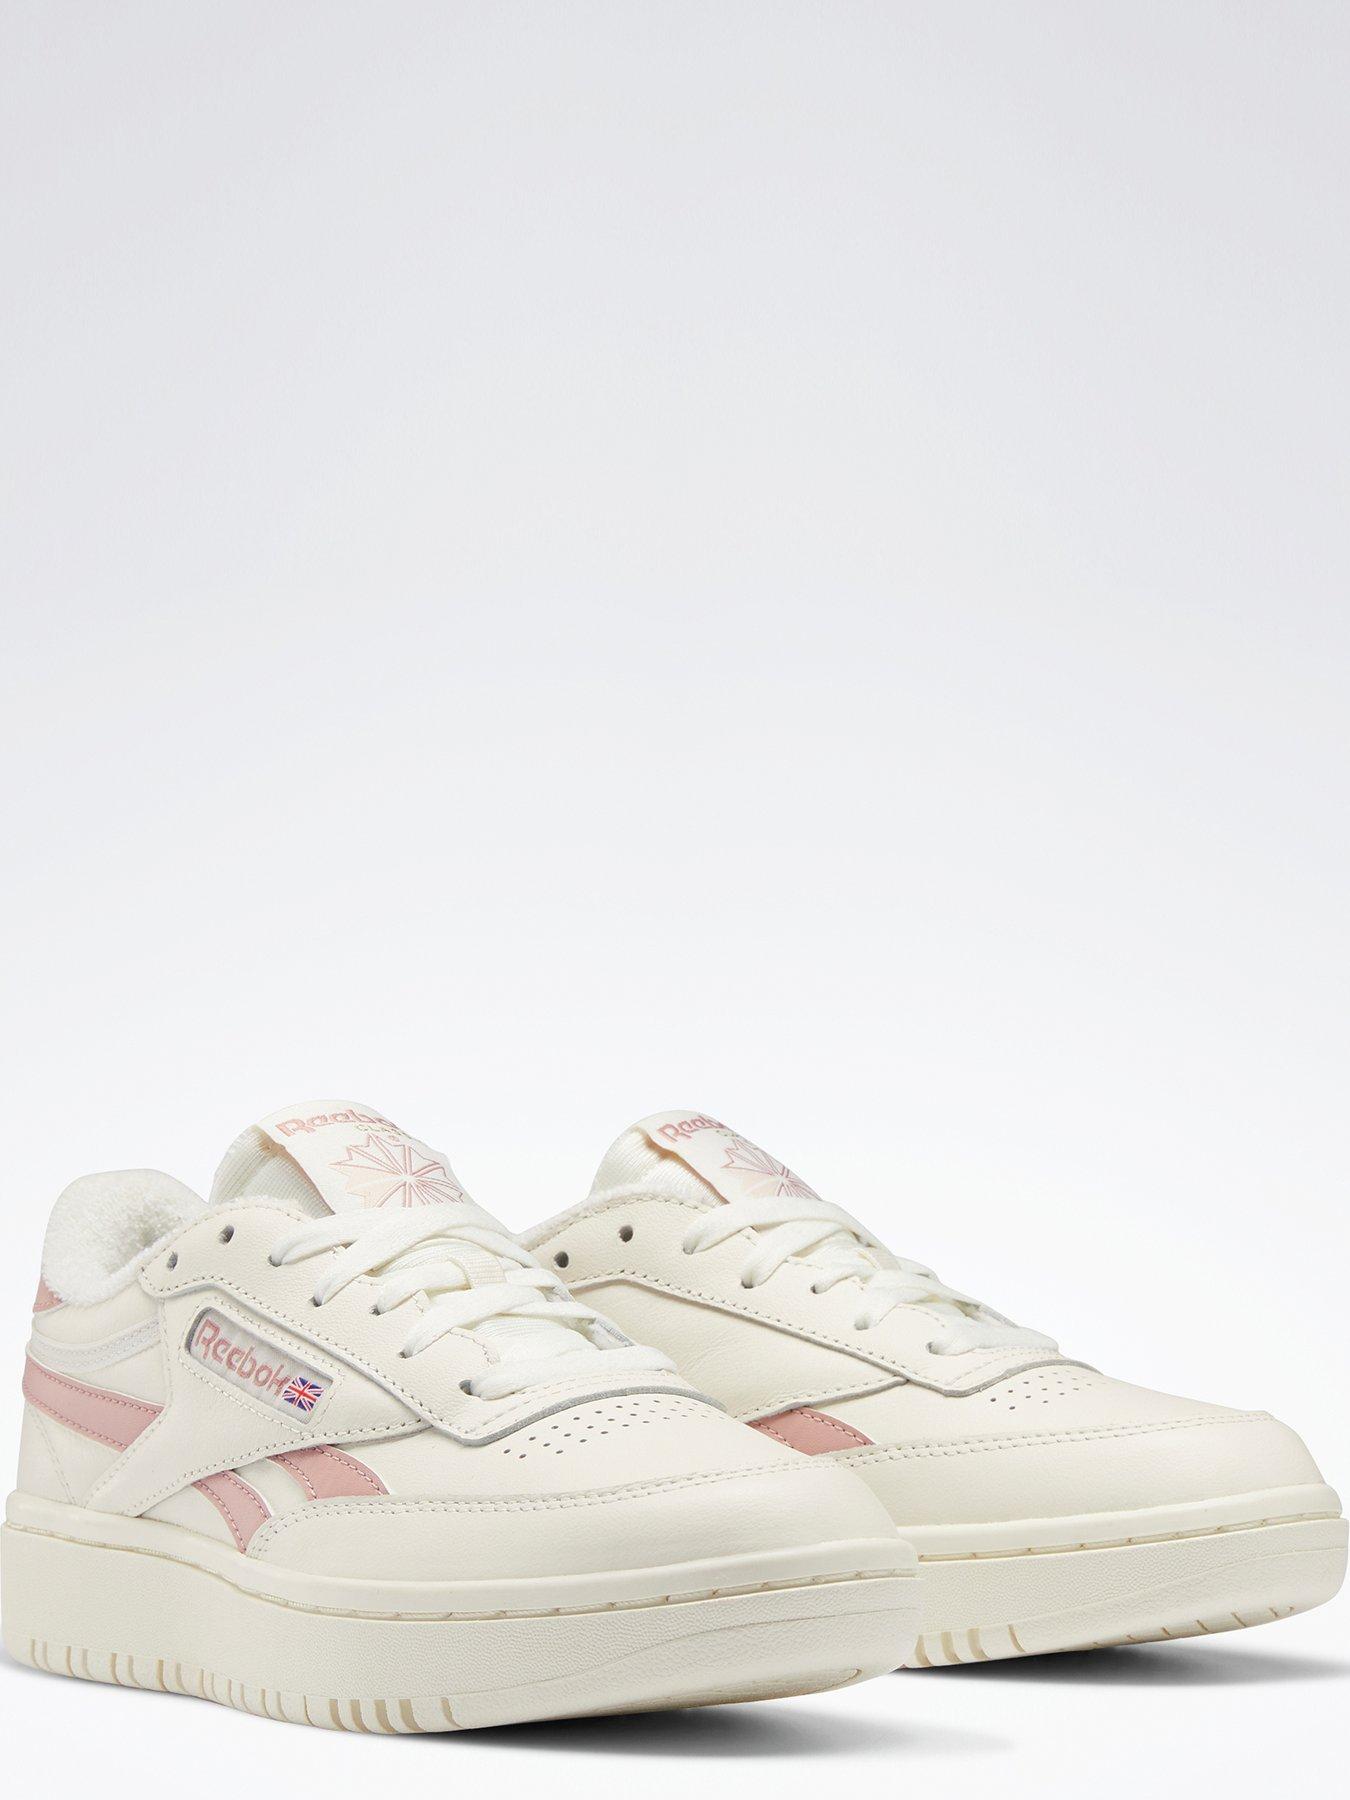 Reebok Club C Double Shoes - White/Pink 